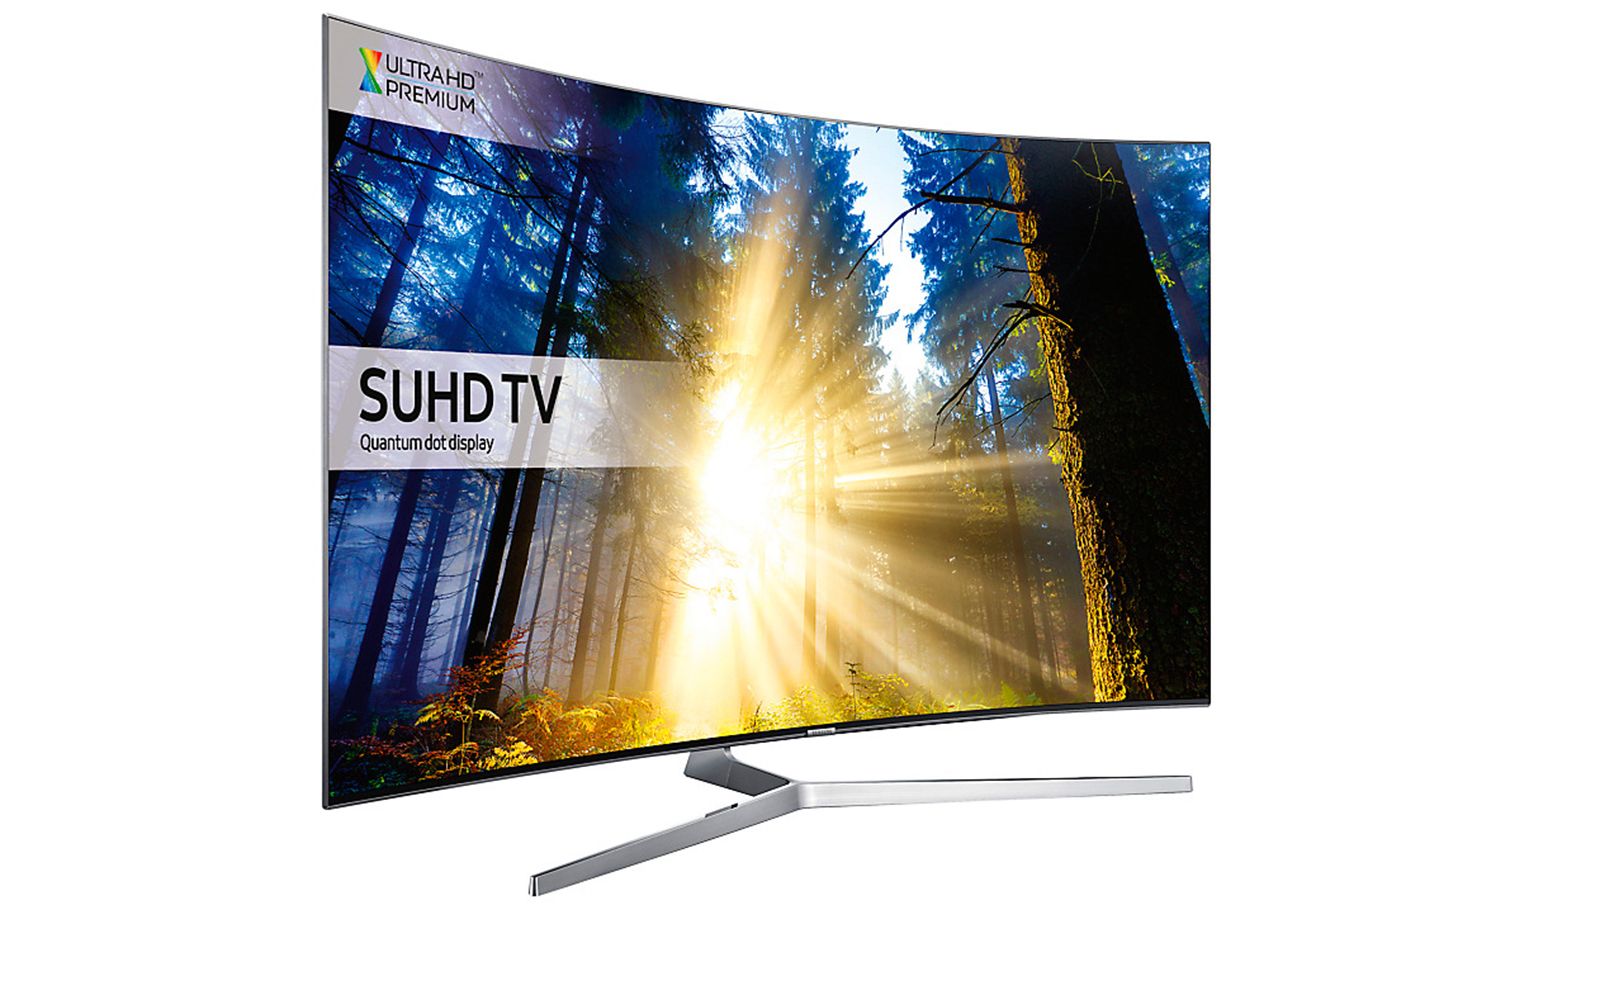 samsung 4k hdr tv choices for 2016 ks9000 ks8000 ks7500 and ks7000 compared image 2